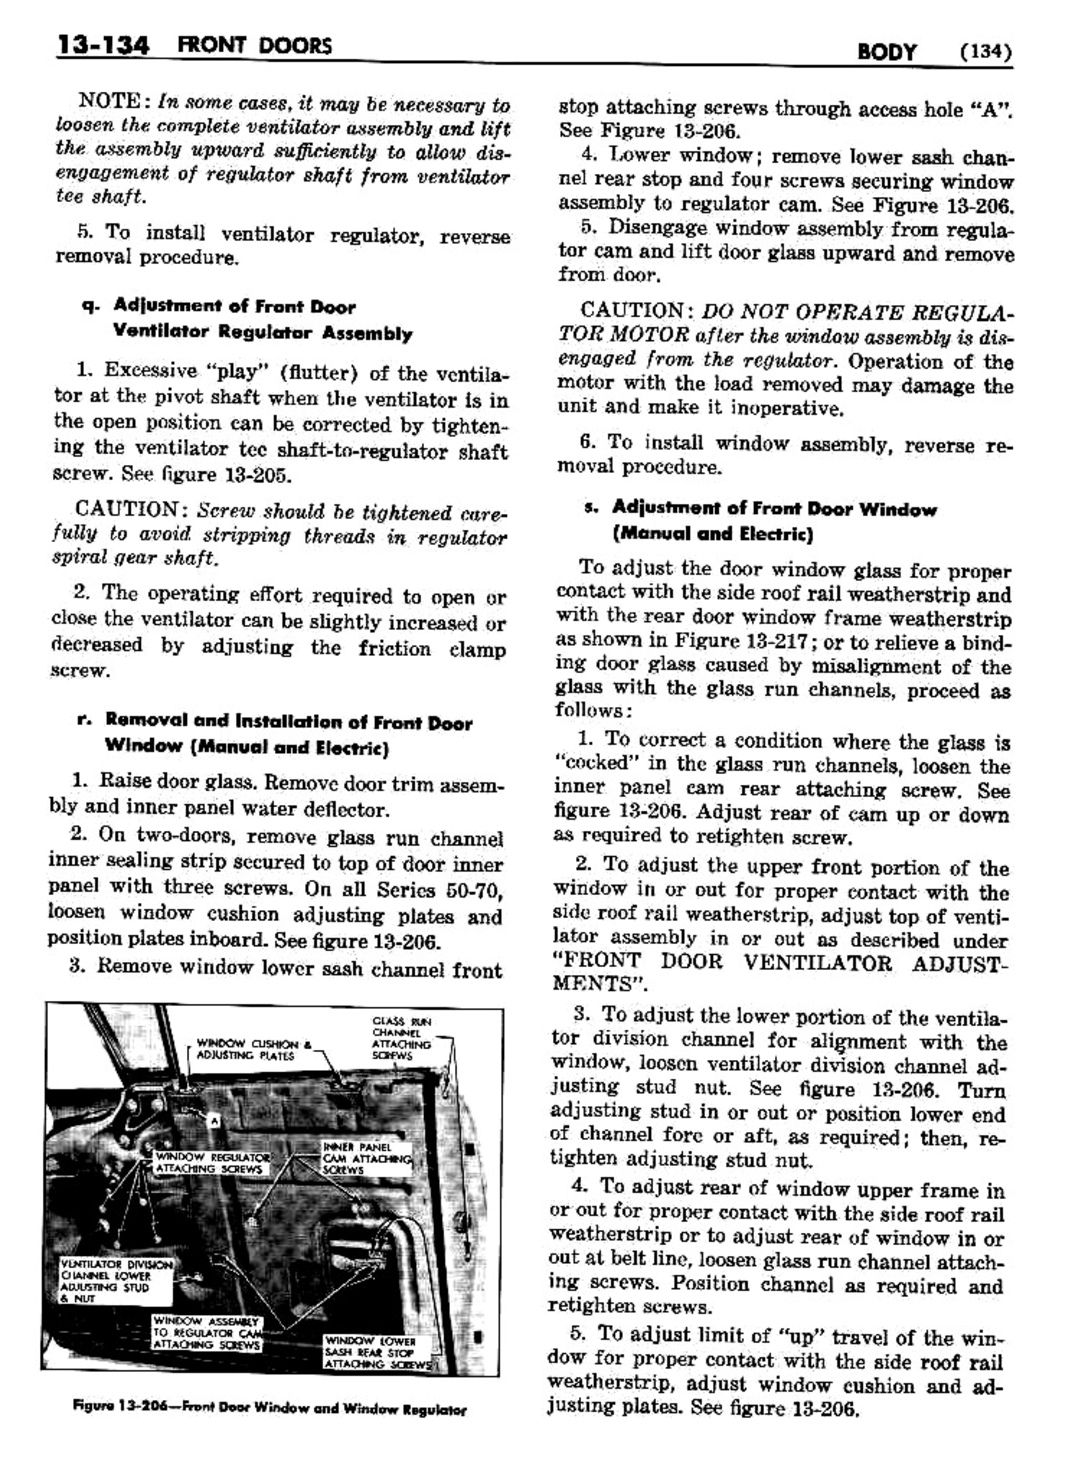 n_1957 Buick Body Service Manual-136-136.jpg